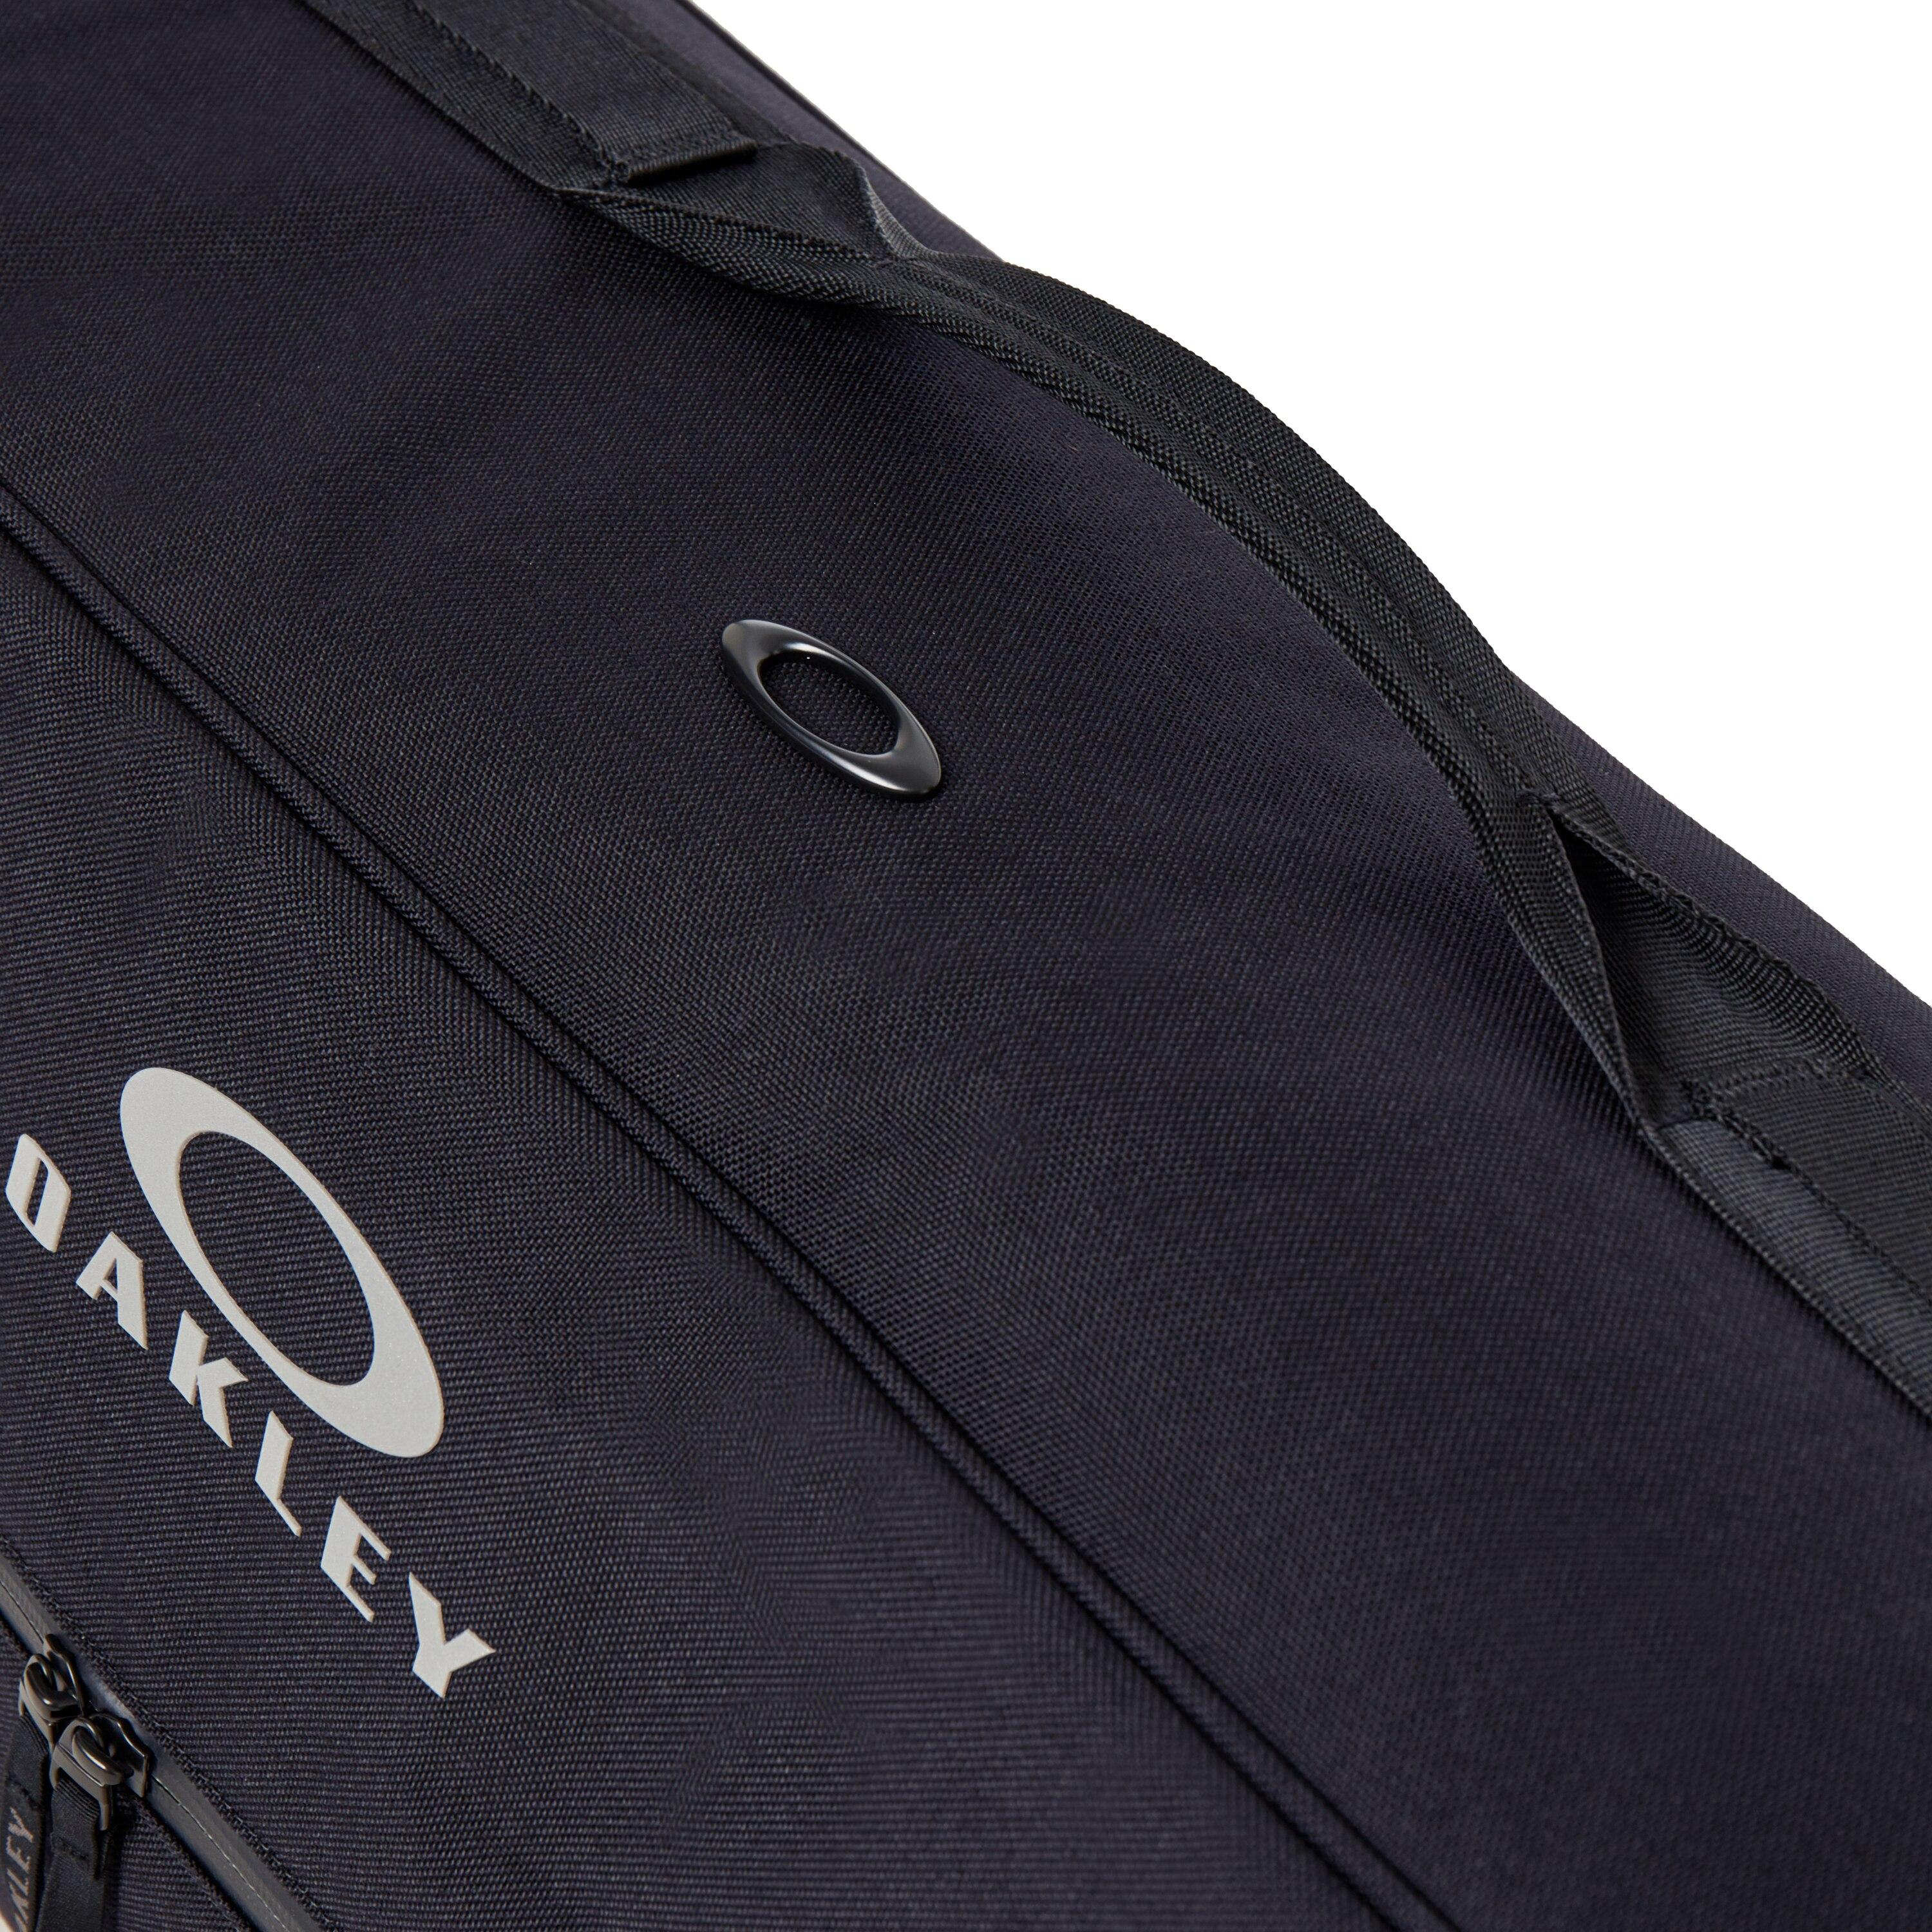 Oakley Synthetic Snow Snowboard Bag in Blue for Men - Lyst